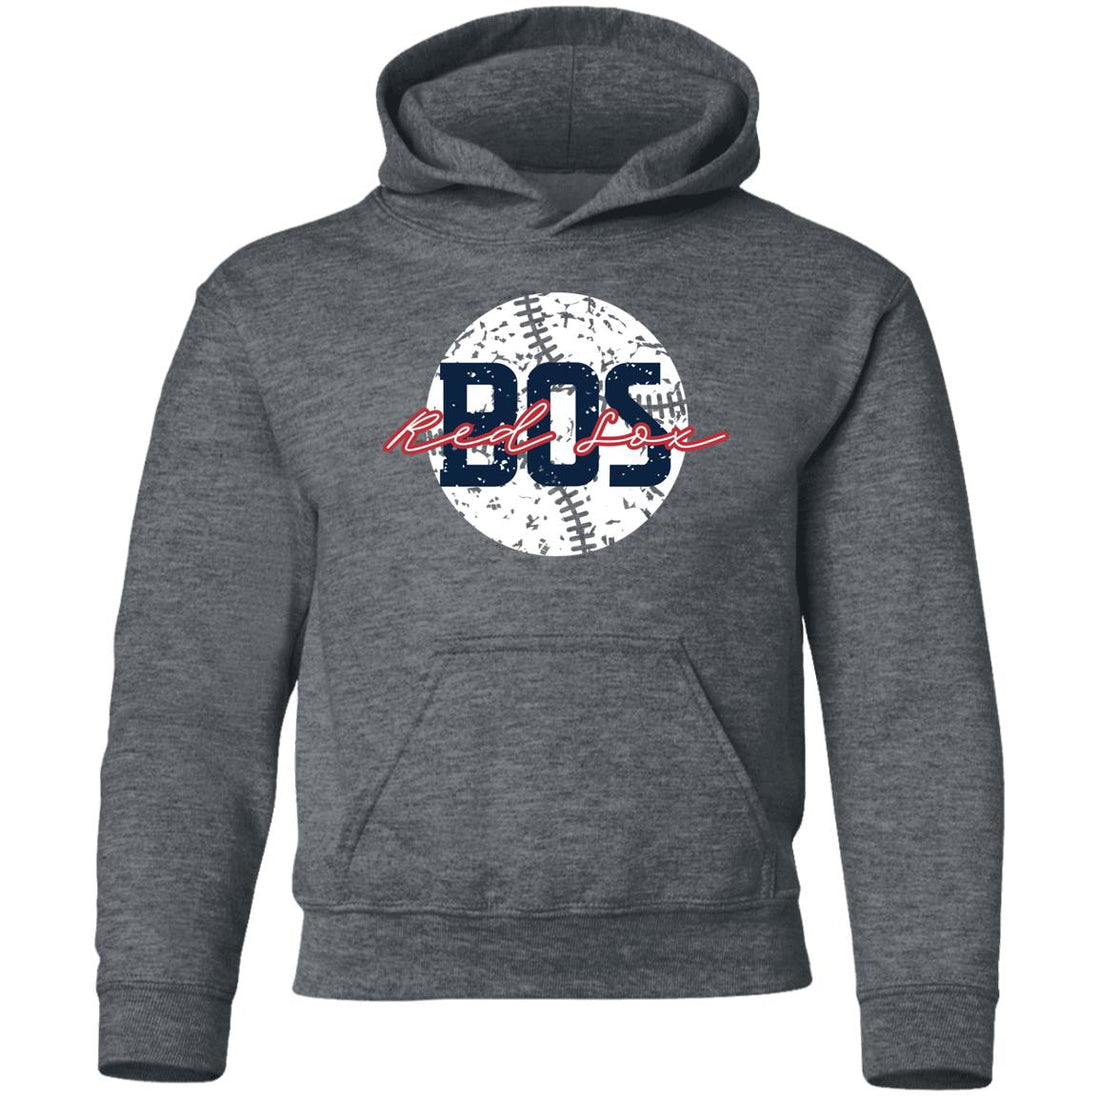 BOS Baseball Youth Hoodie - Sweatshirts - Positively Sassy - BOS Baseball Youth Hoodie